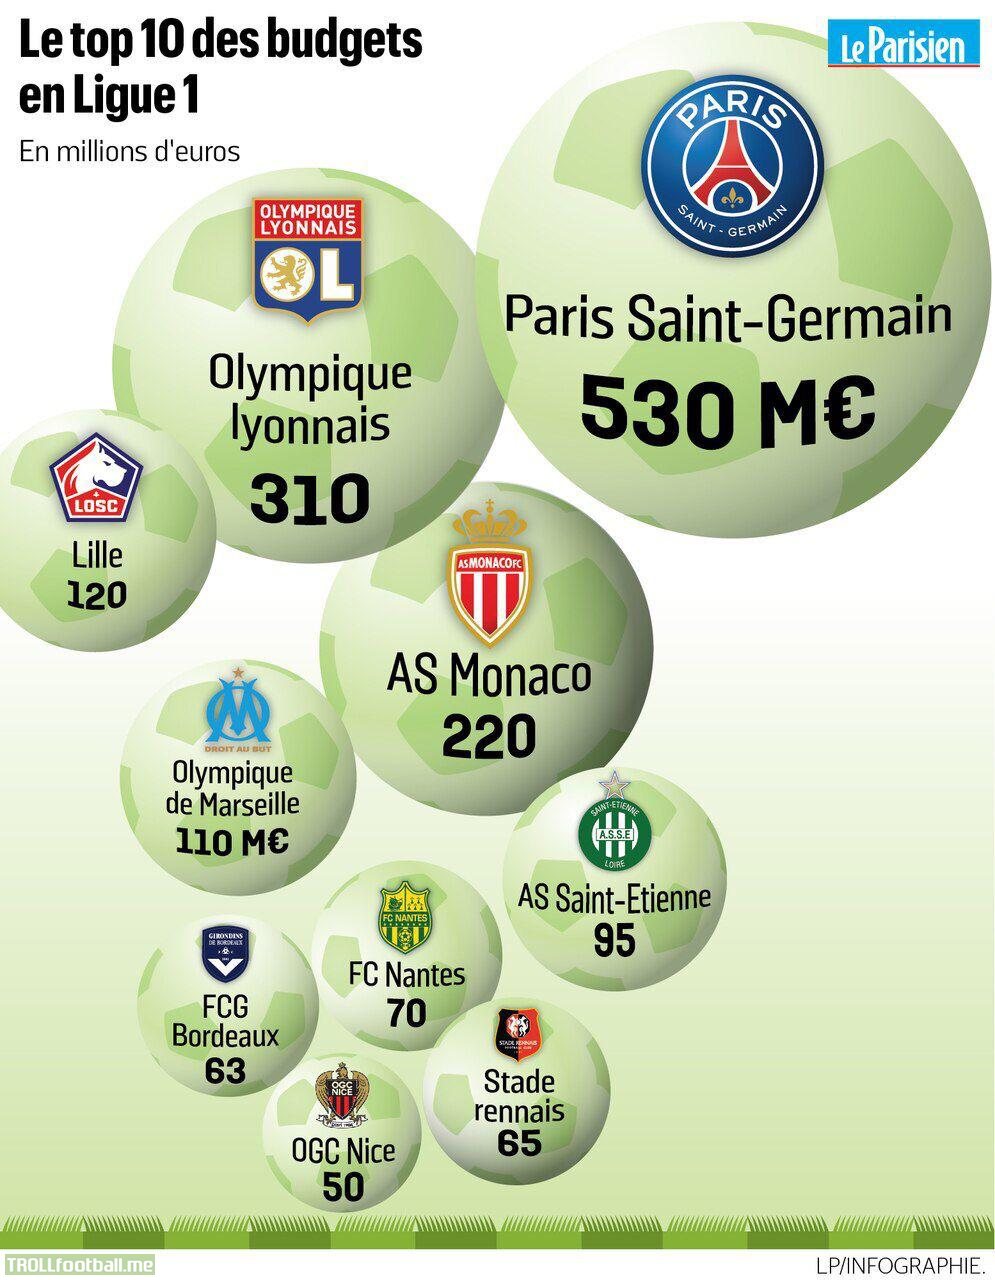 Ligue 1 19/20 entire club operating budgets.